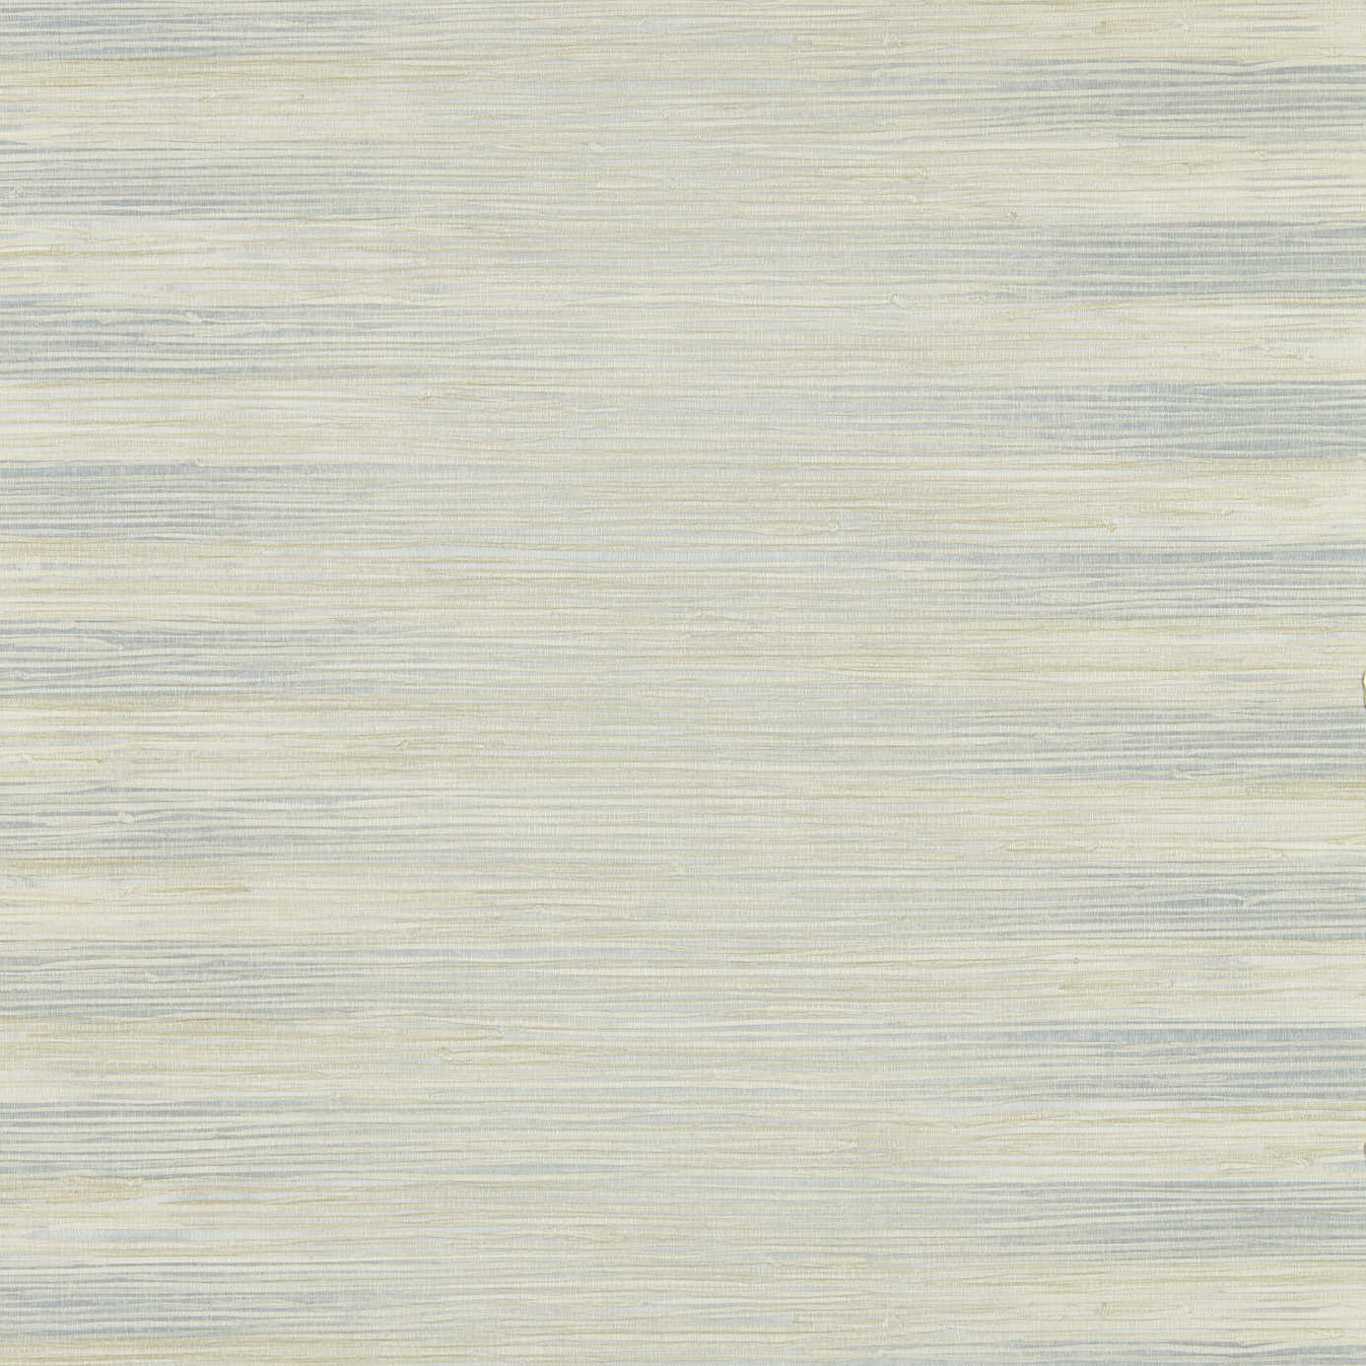 Kensington Grasscloth Mineral Wallpaper by ZOF